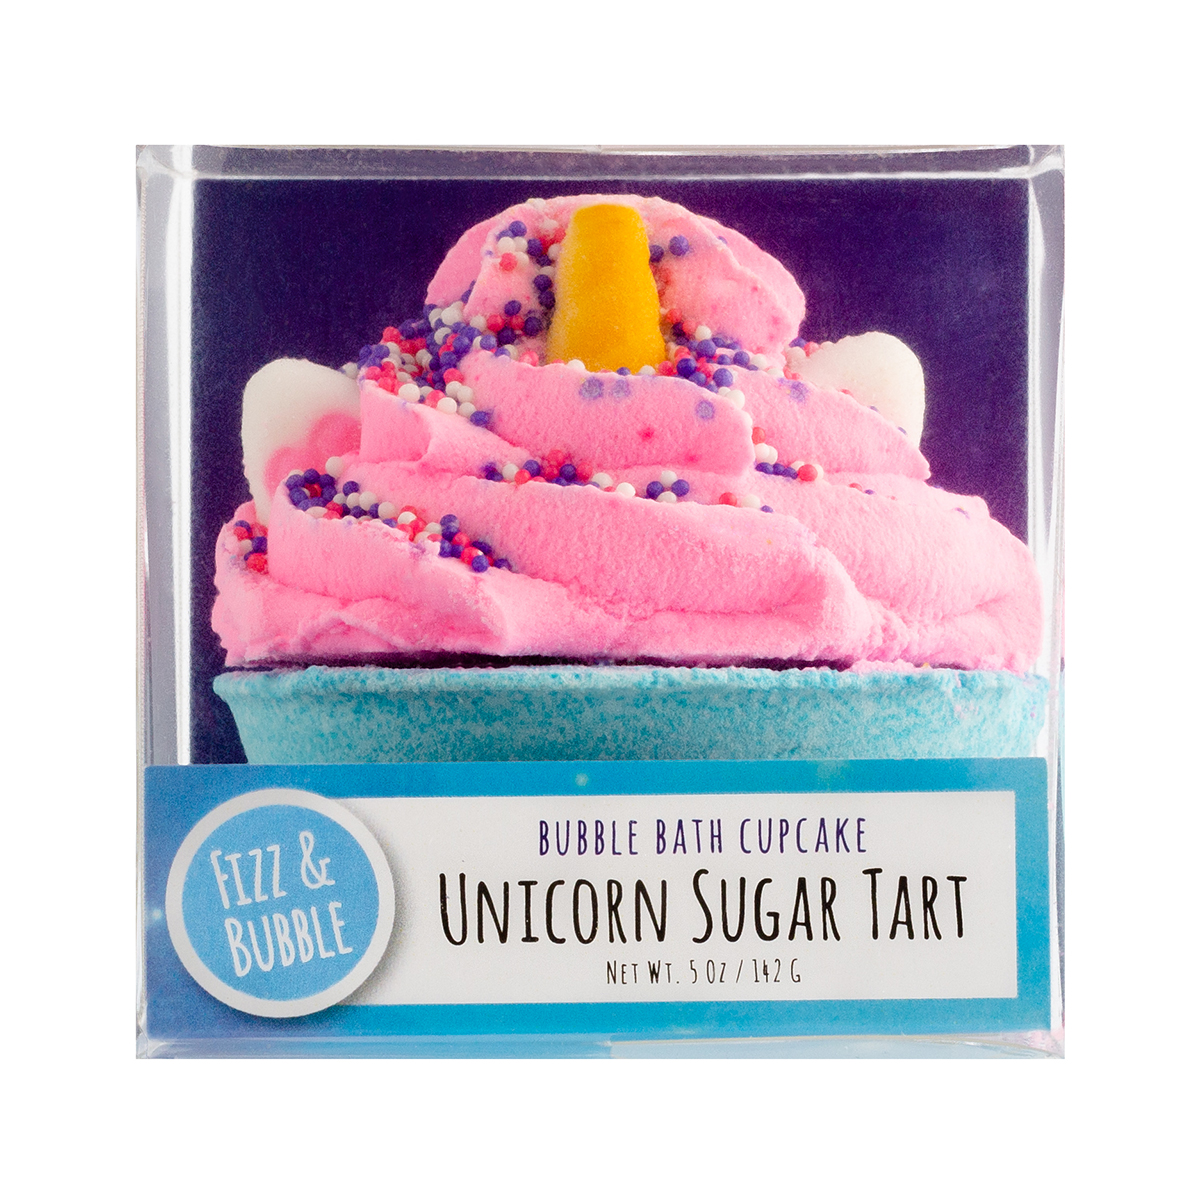 Fizz & Bubble Unicorn Sugar Tart Bubble Bath Cupcake